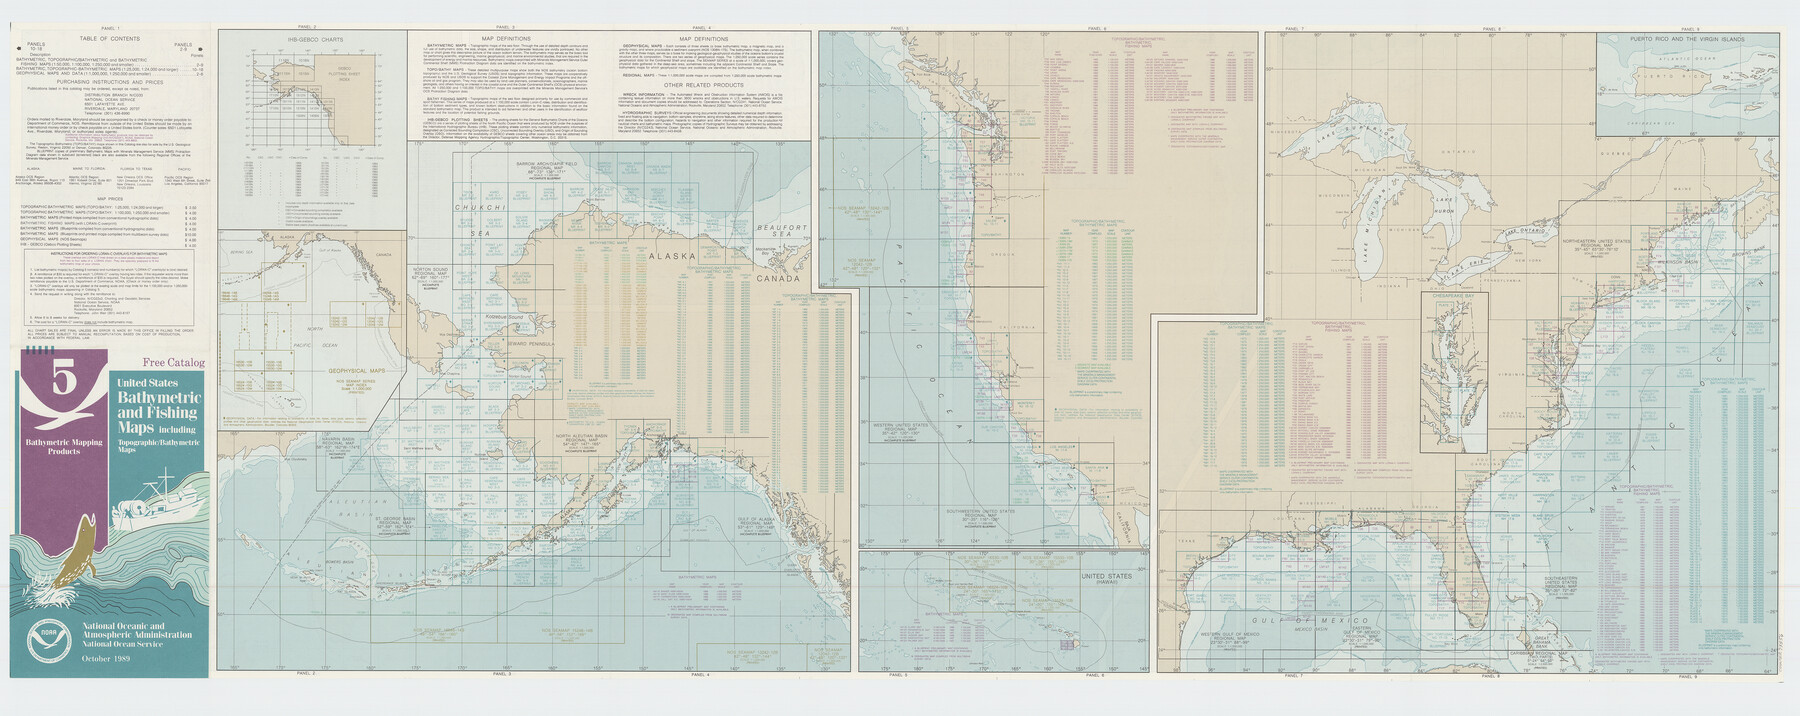 https://historictexasmaps.com/wmedia_w1800h1800/maps/73556.tif.jpg